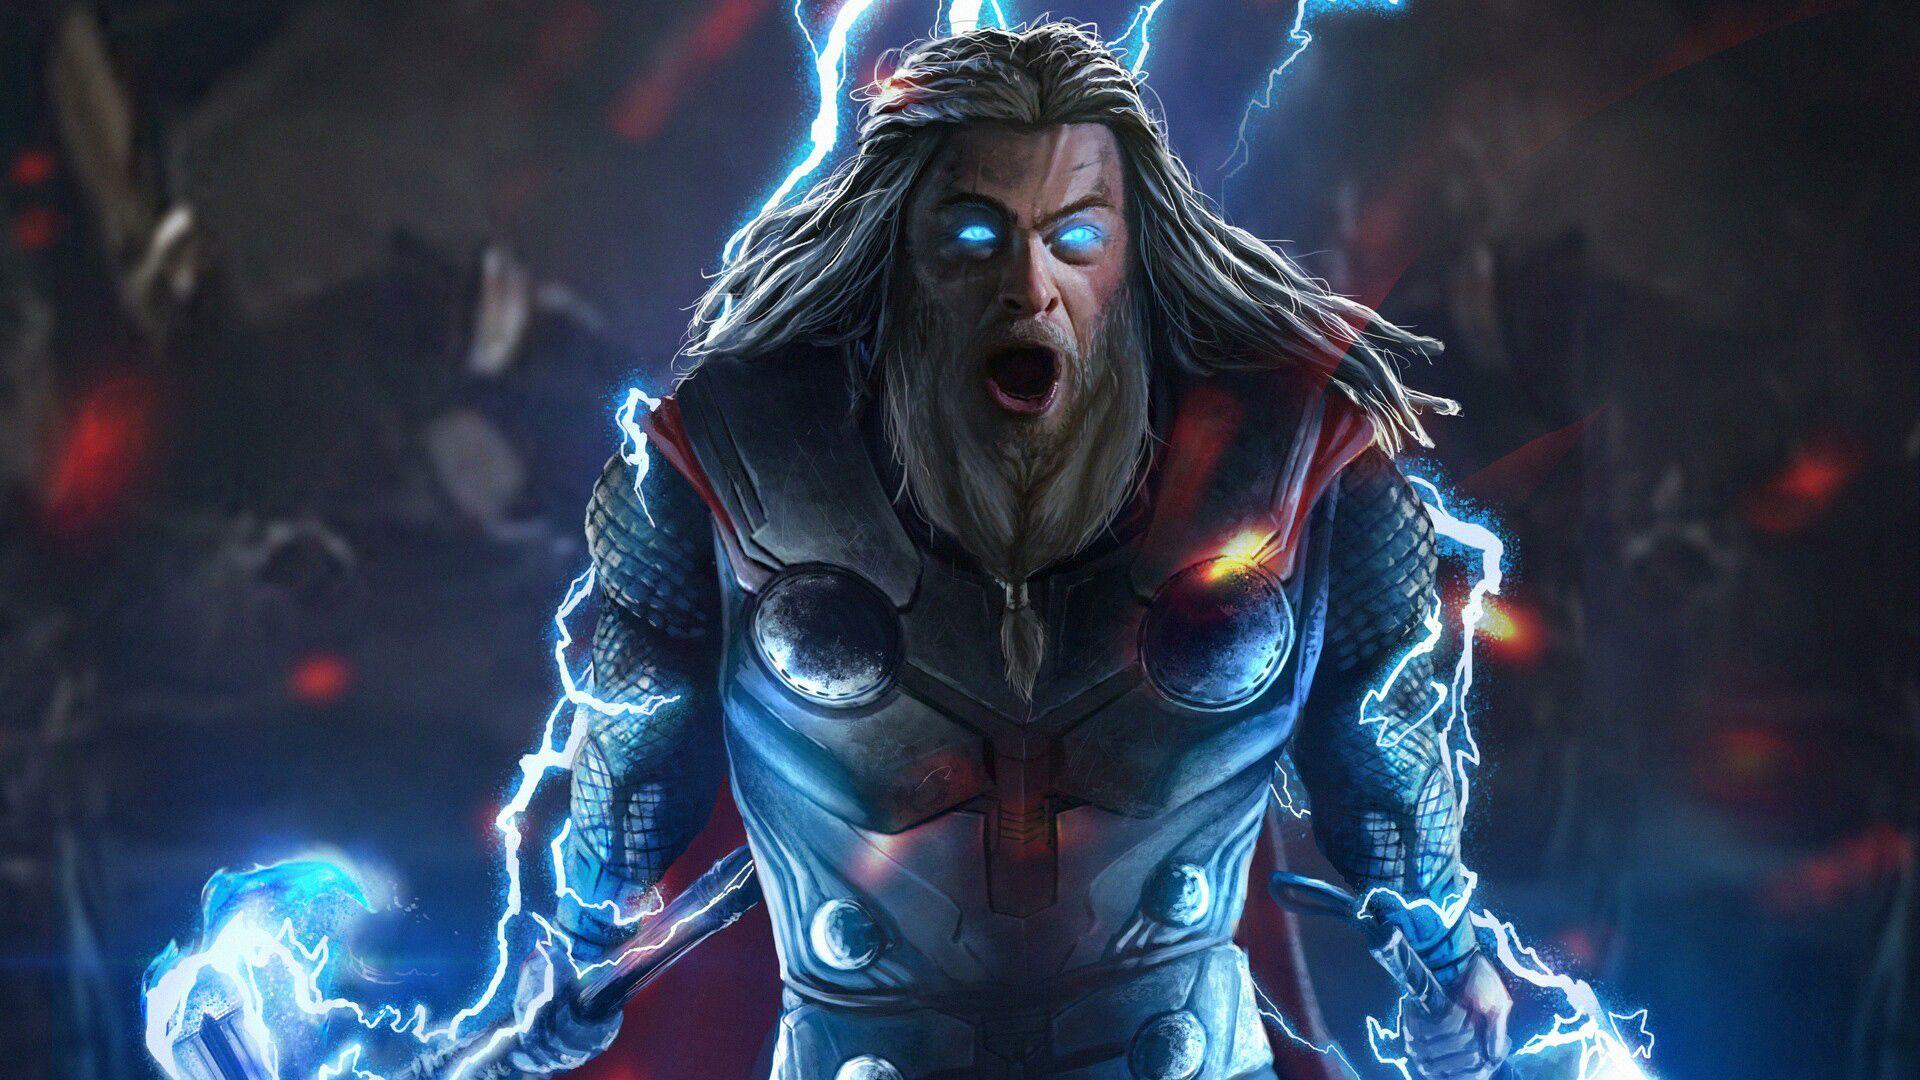 Thor: Ragnarok download the new